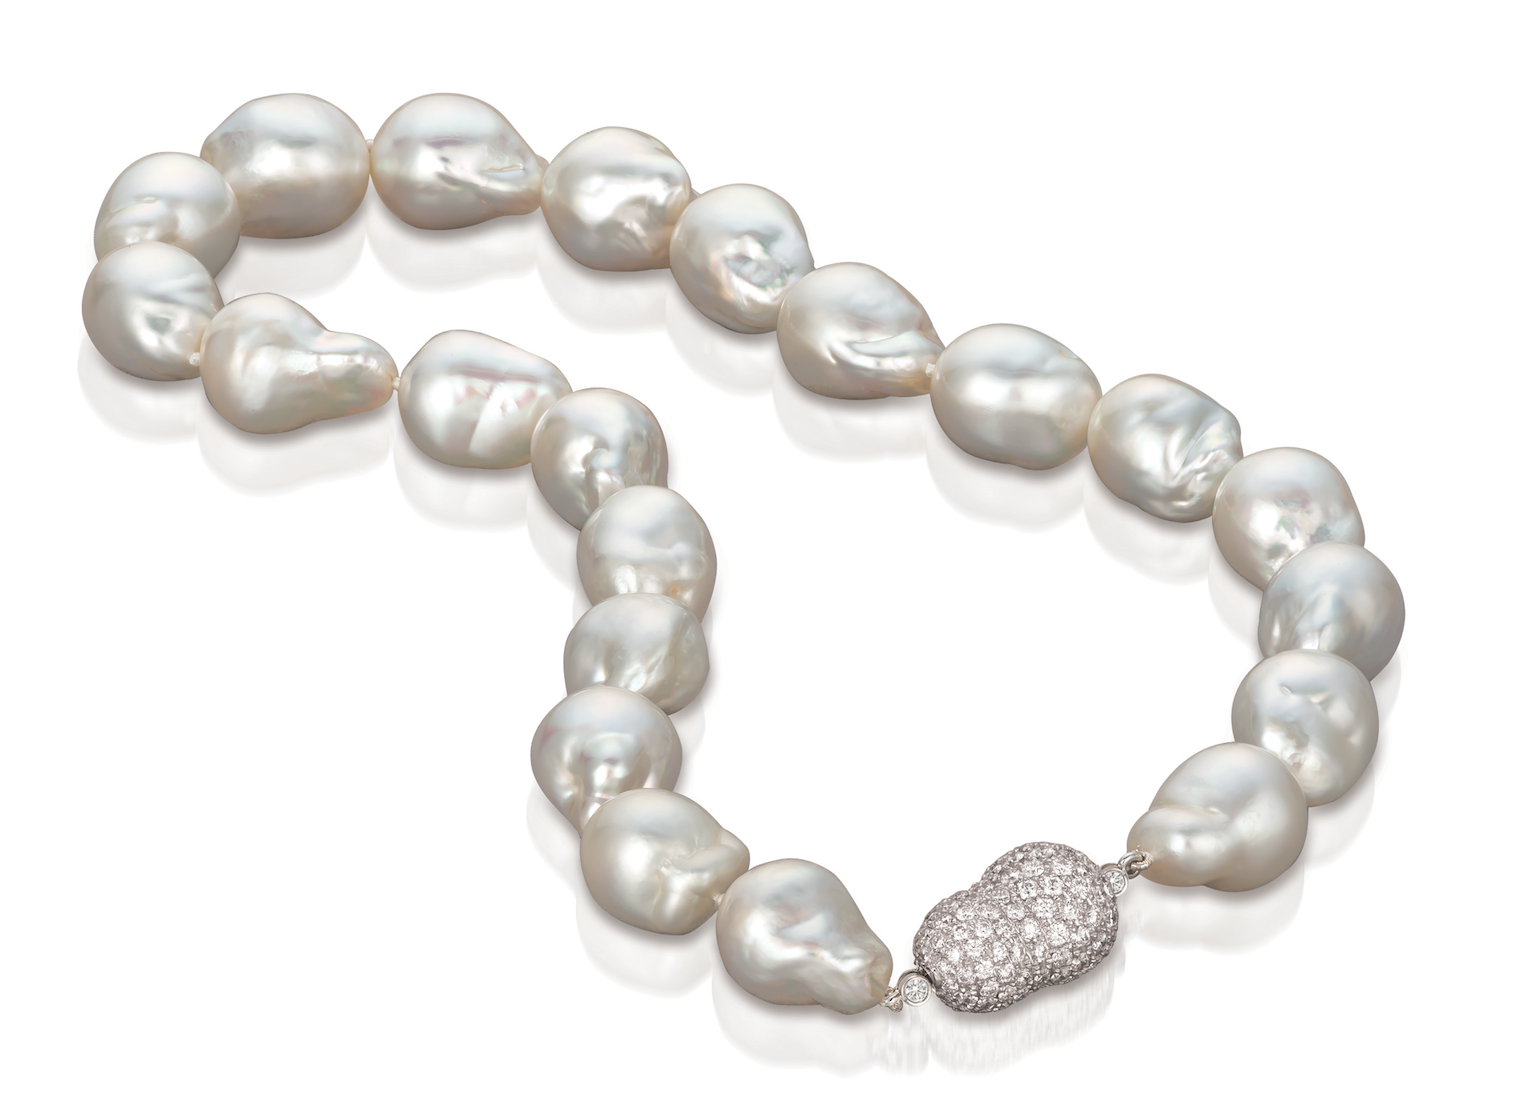 Rare & Beautiful: South Sea Pearls